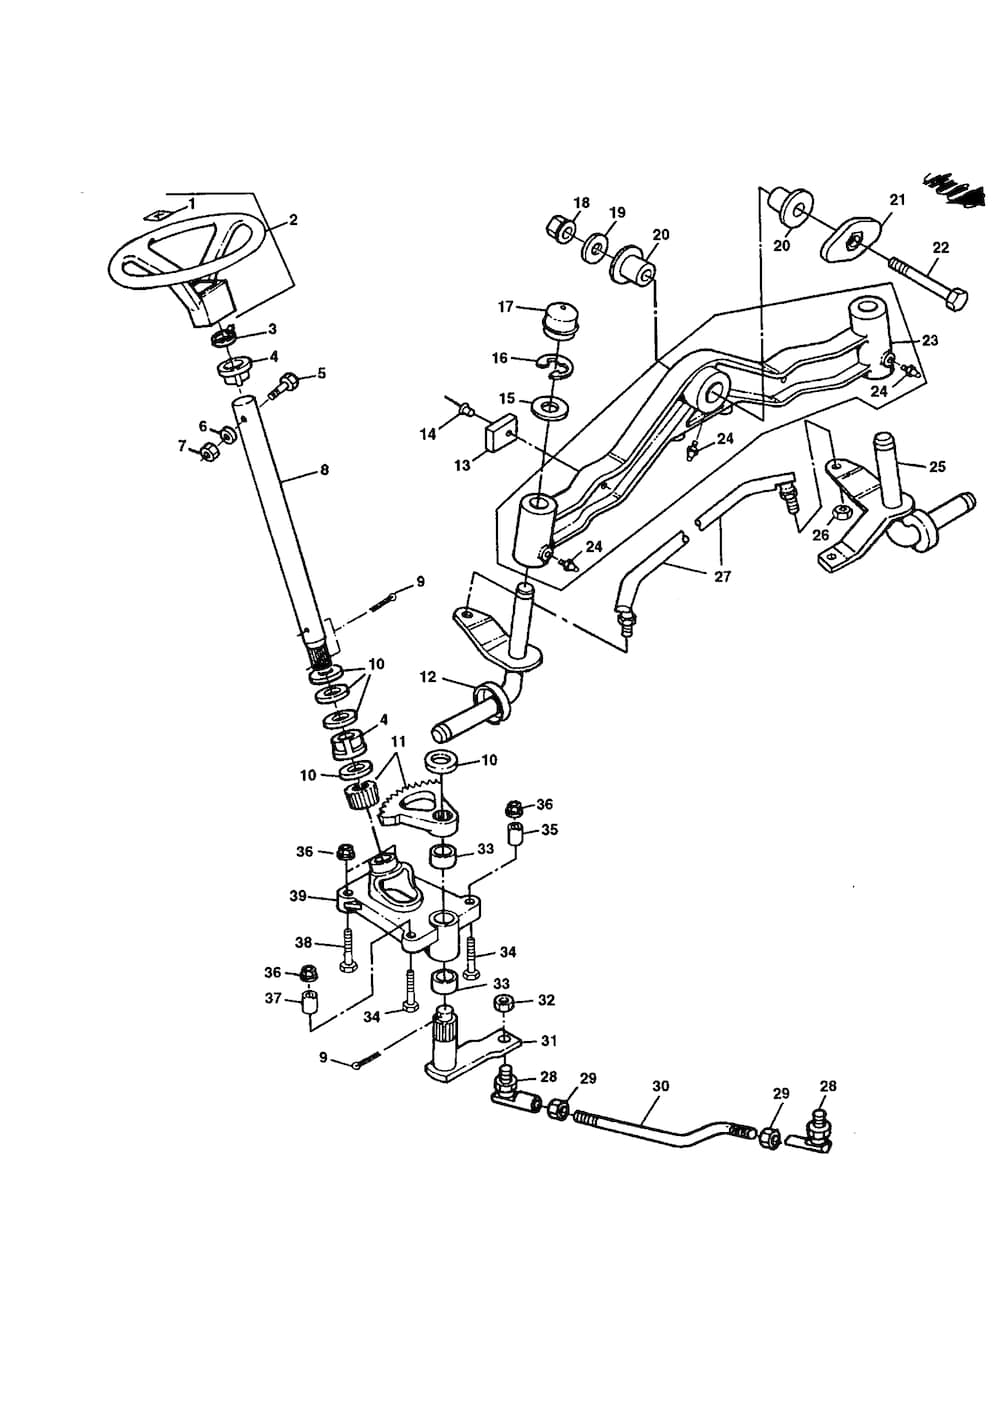 john deere lt155 manual steering parts diagram